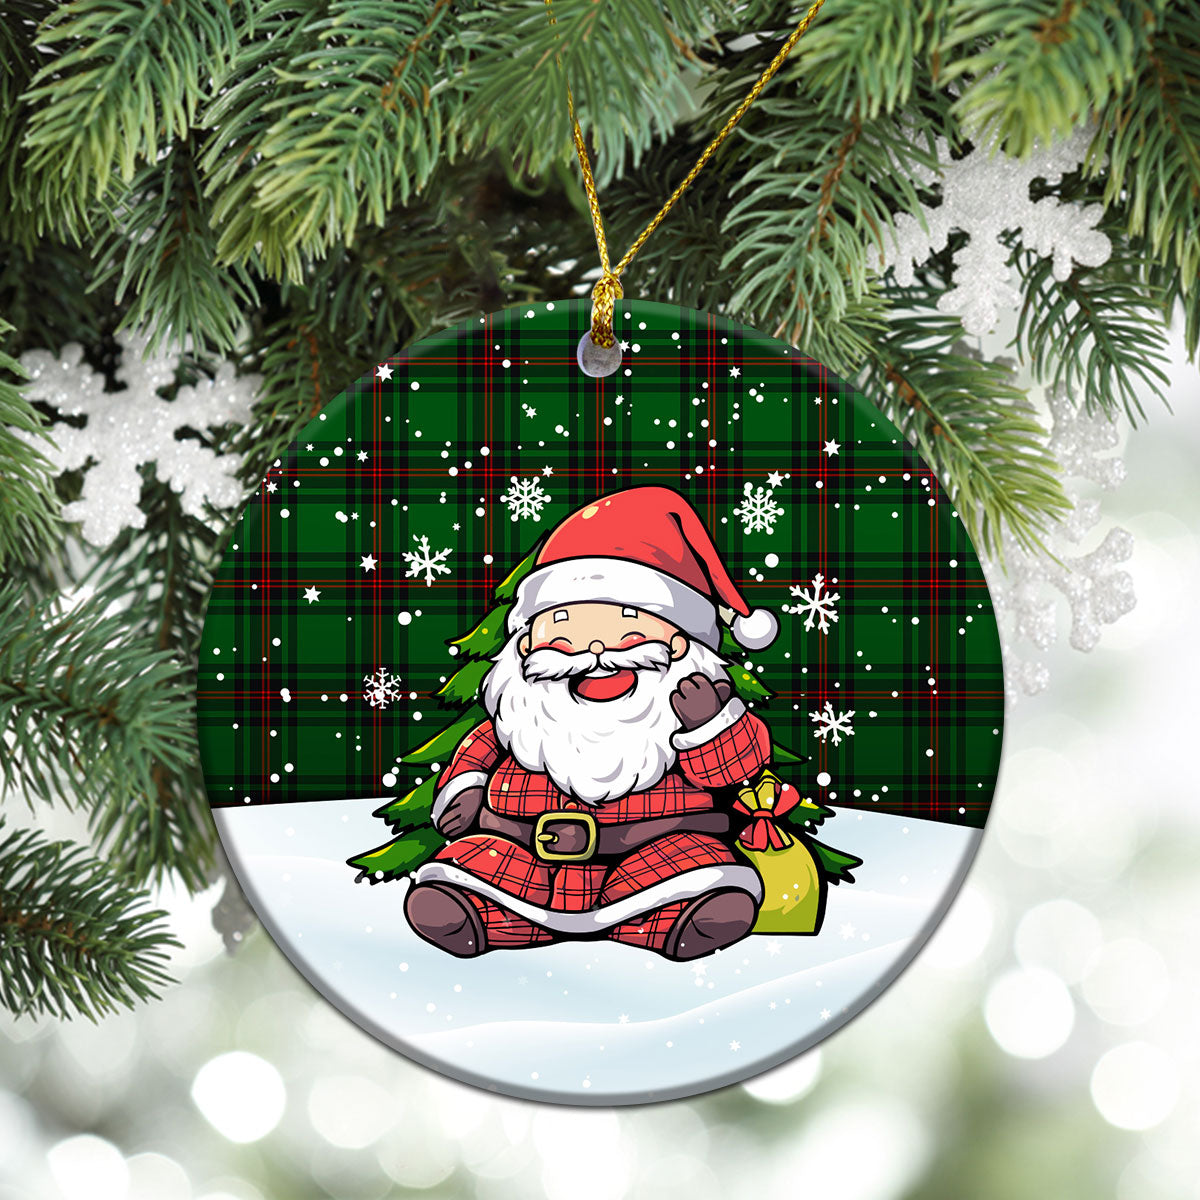 Orrock Tartan Christmas Ceramic Ornament - Scottish Santa Style